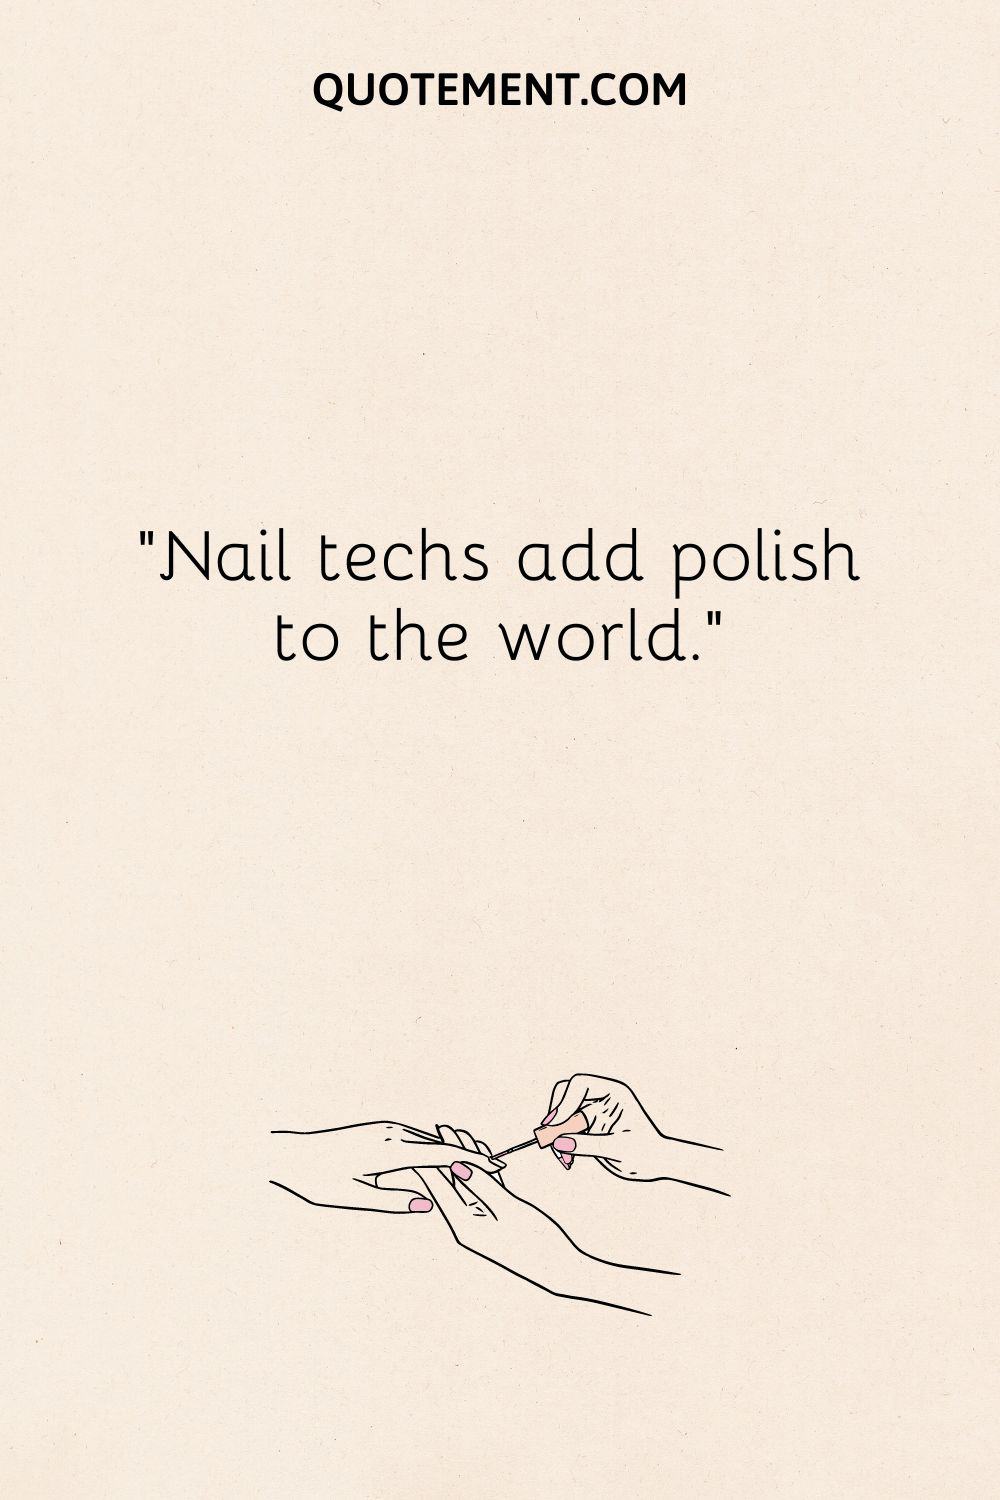 Nail techs add polish to the world